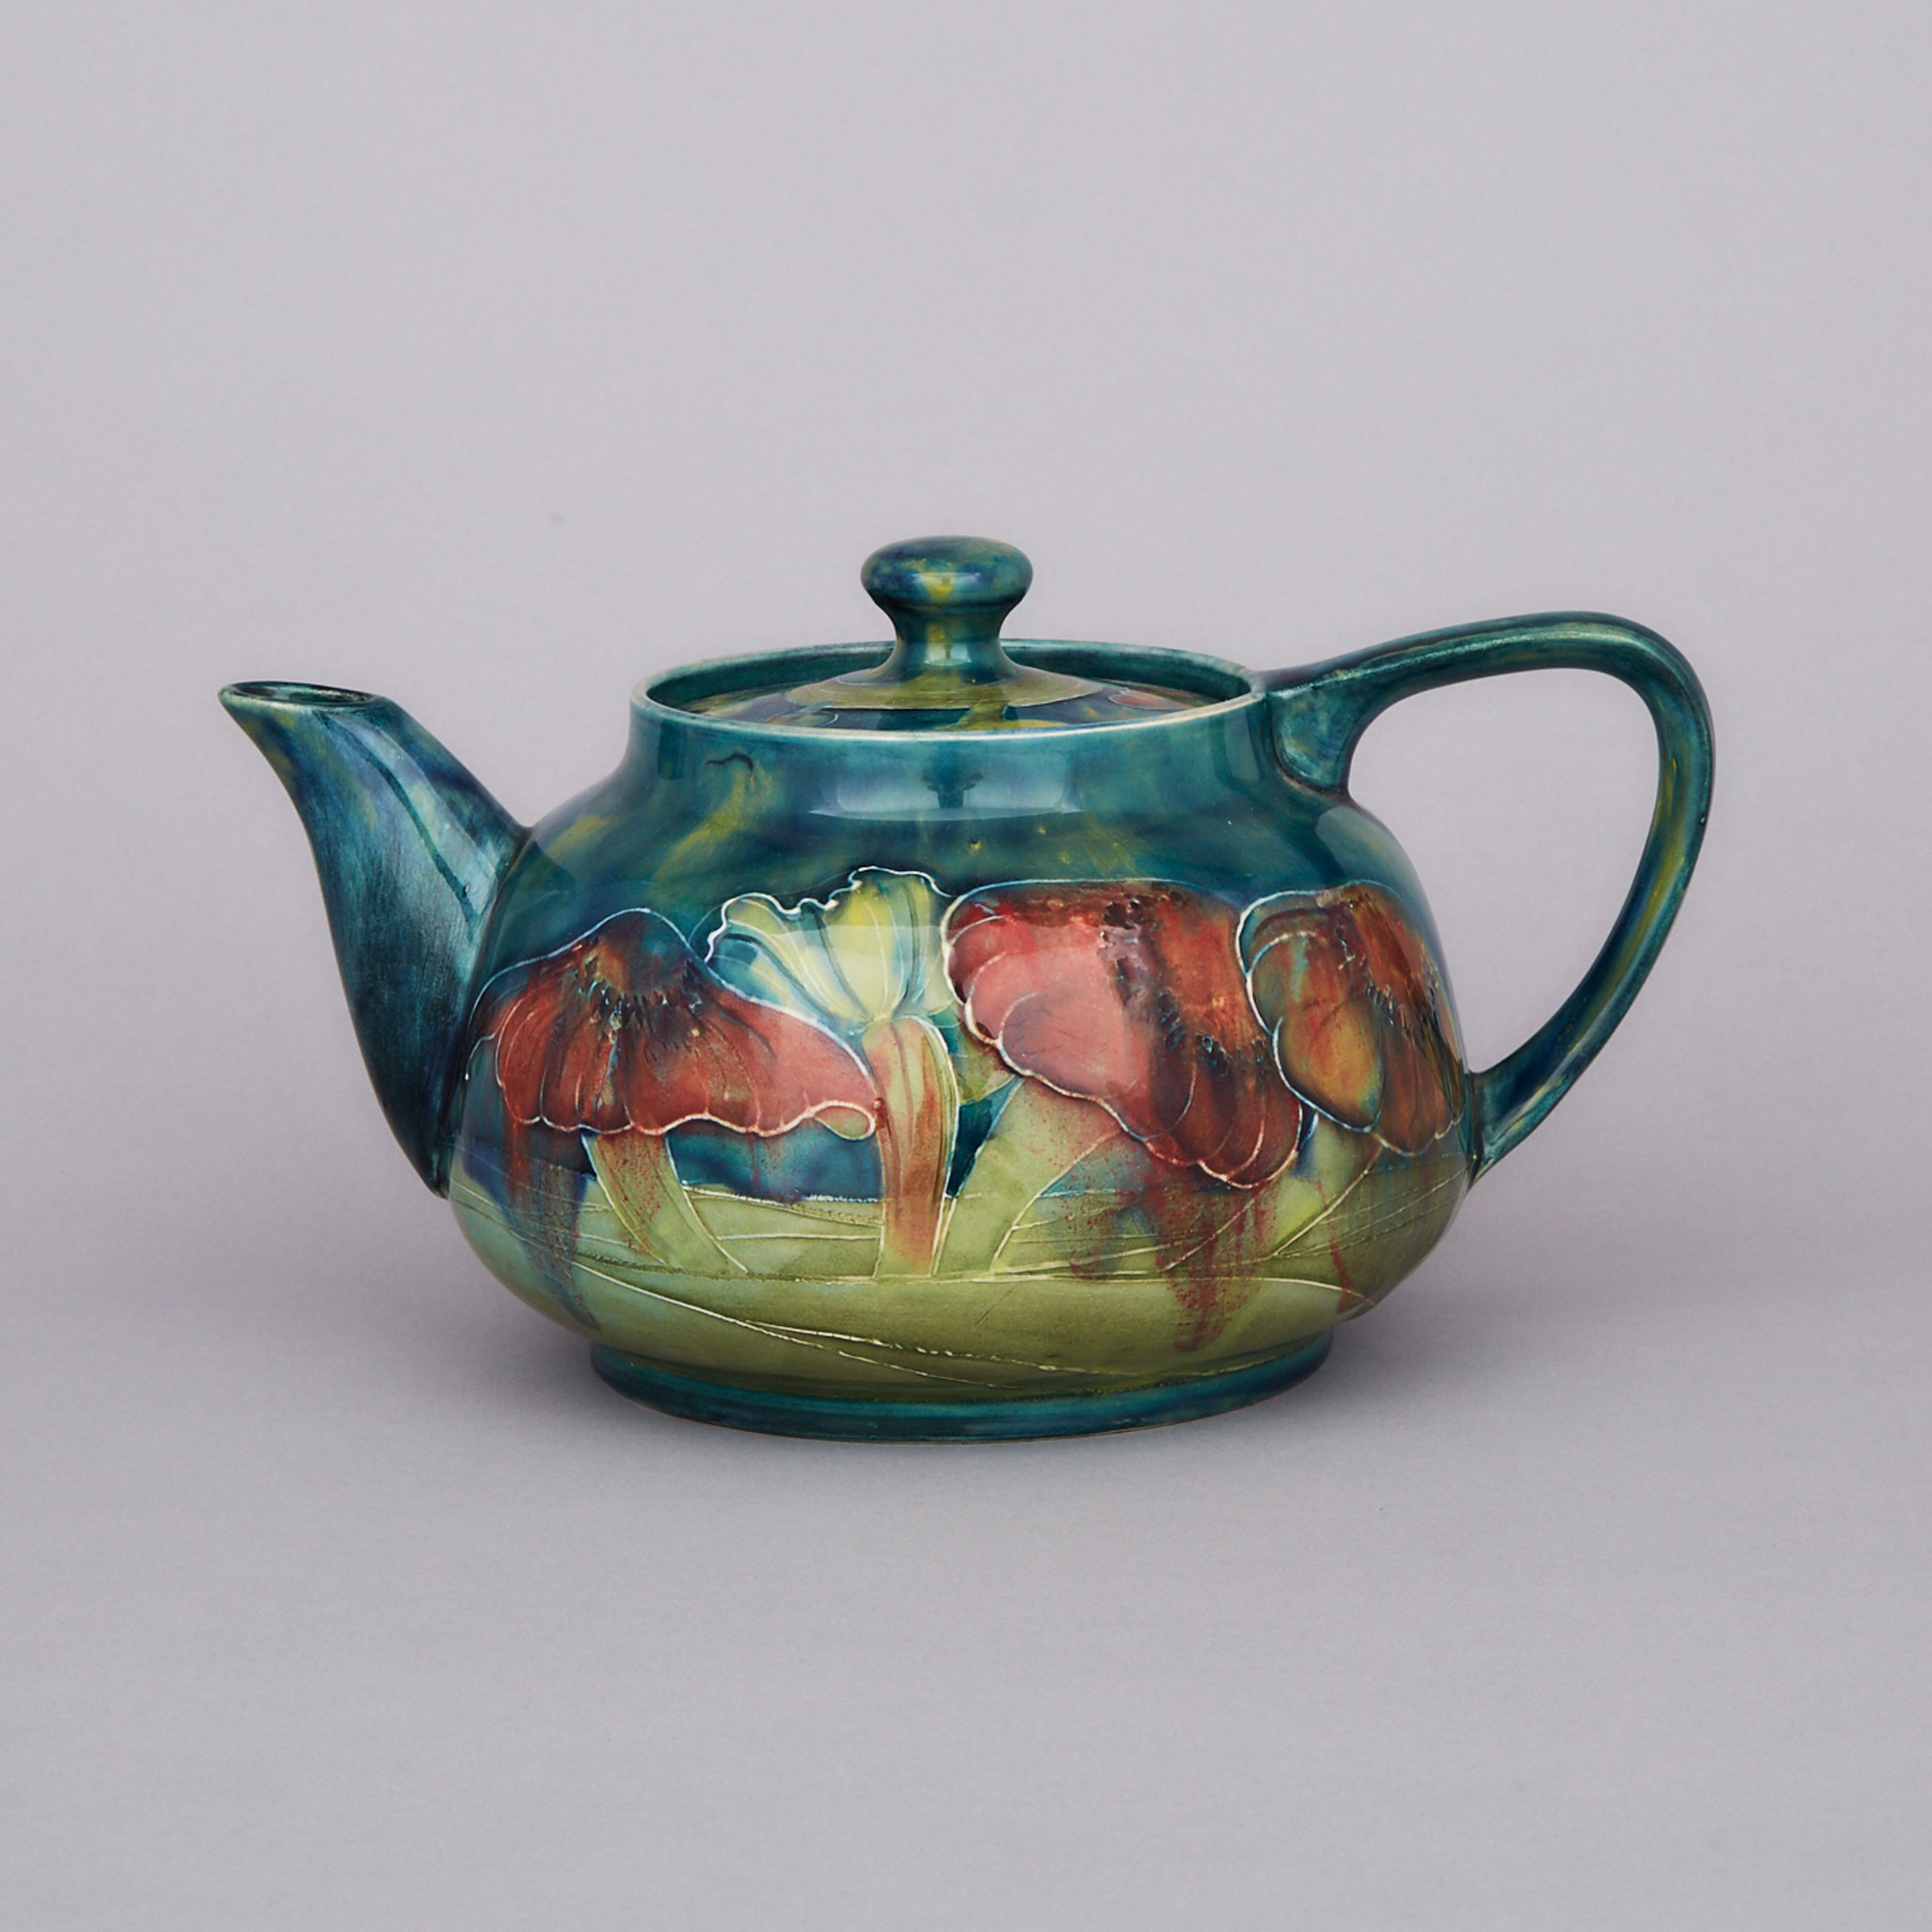 Macintyre Moorcroft Claremont Teapot, for Shreve & Co., c.1905-10